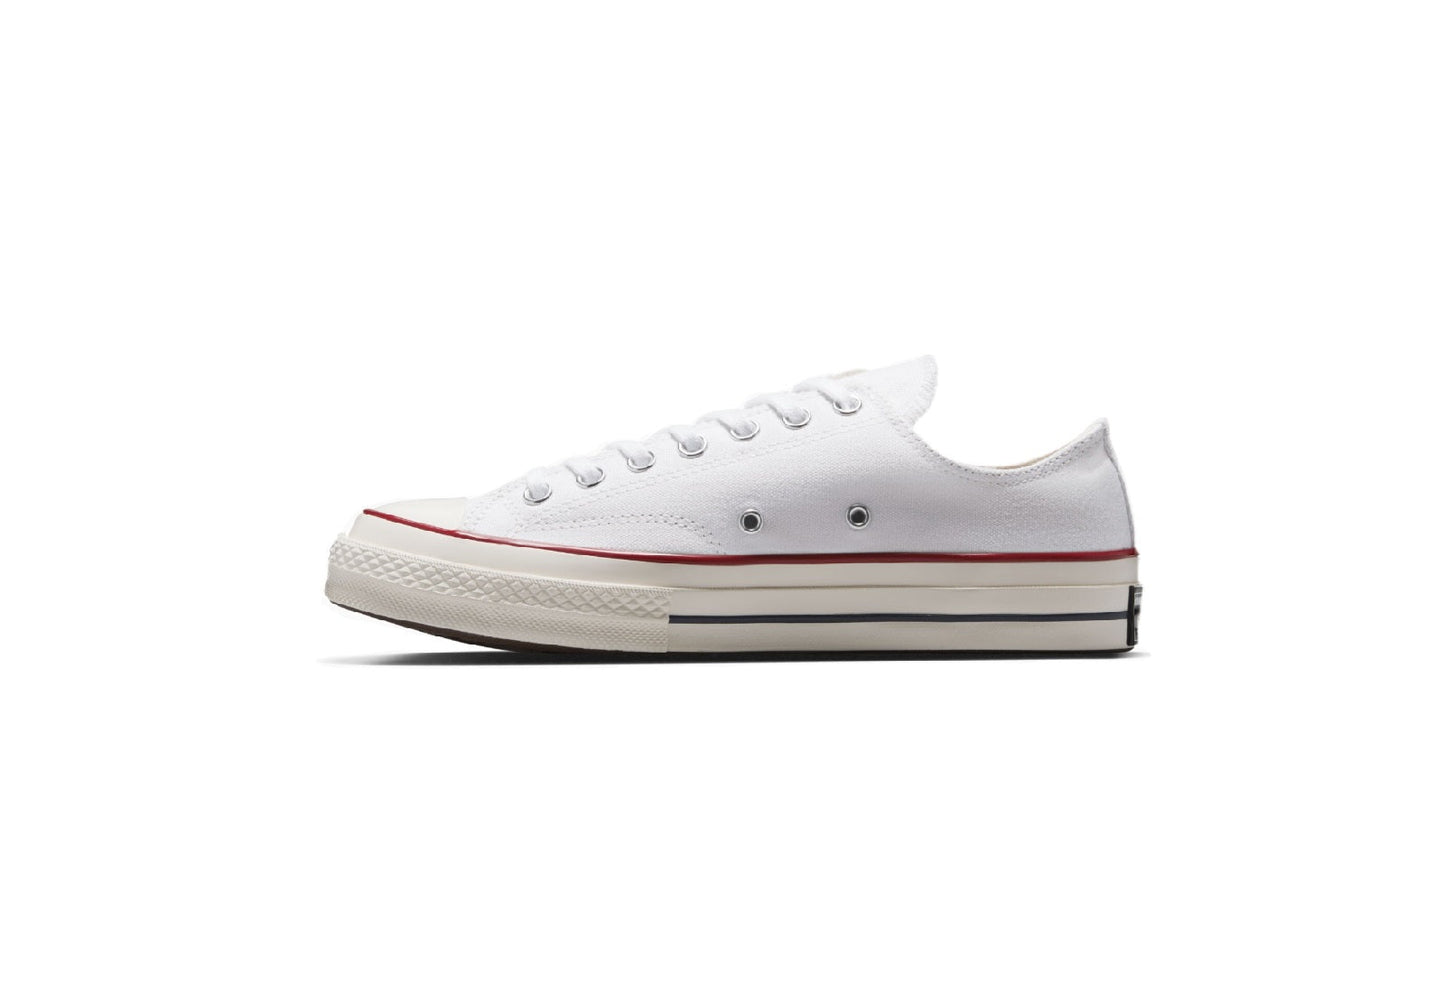 Converse Chuck 70 Low Top Vintage Canvas Sneaker, White/Garnet/Egret (Women)